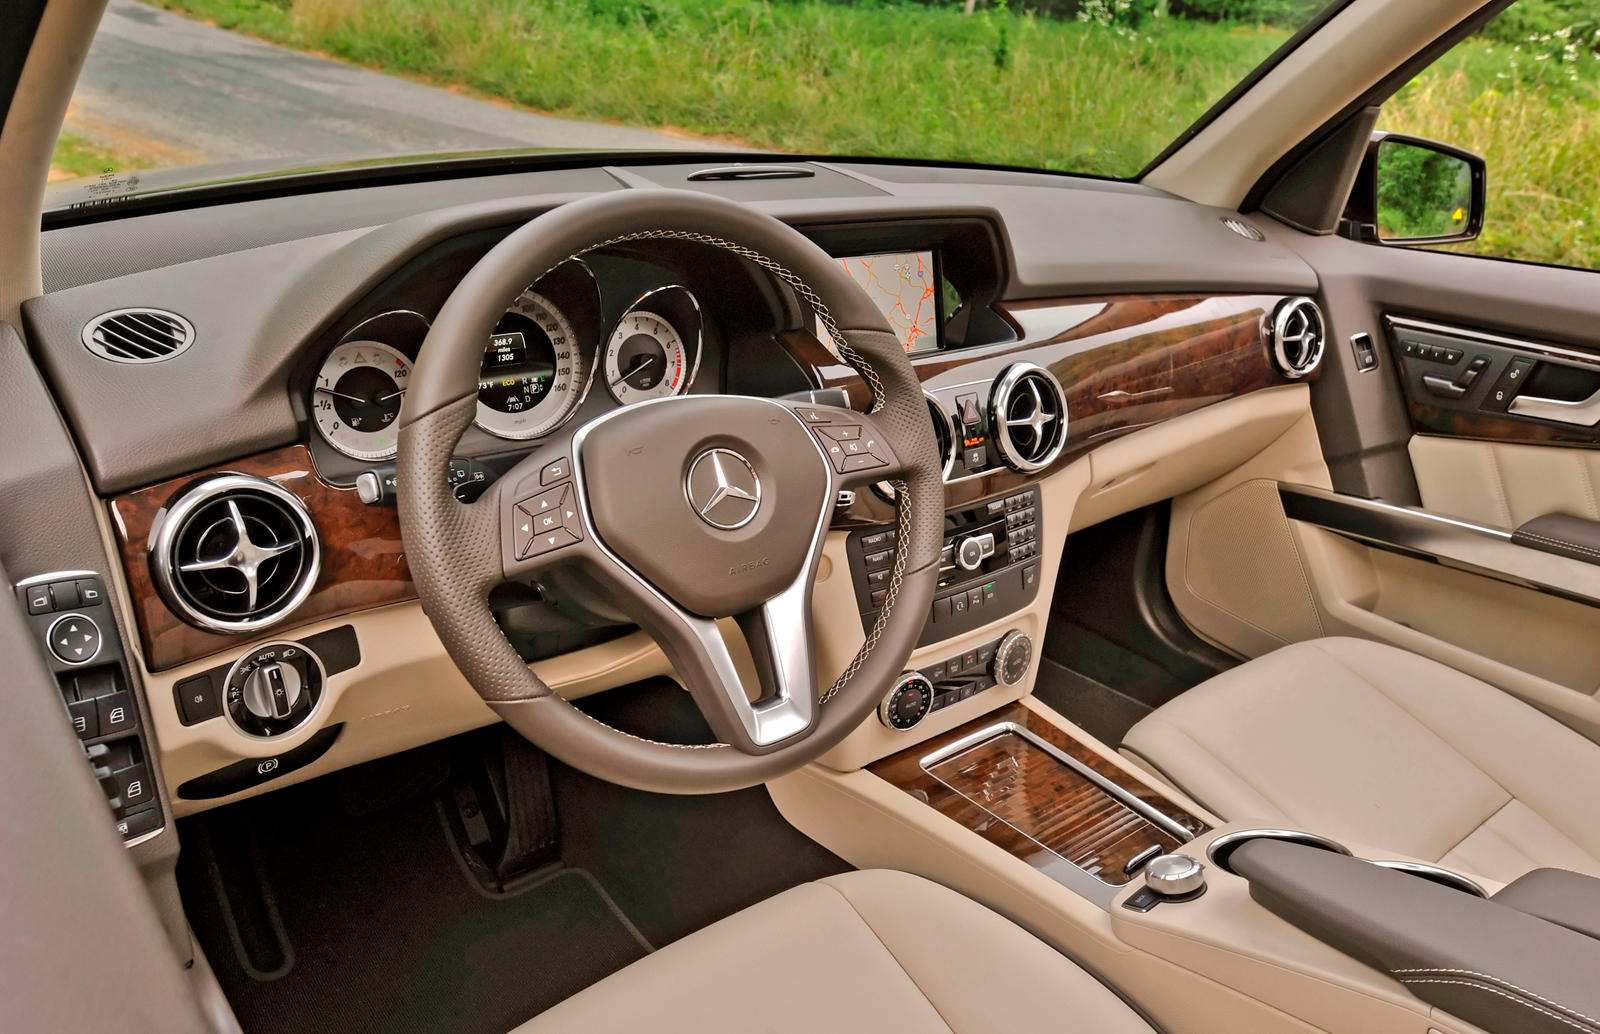 2014 Mercedes-Benz GLK-Class: 76 Interior Photos | U.S. News